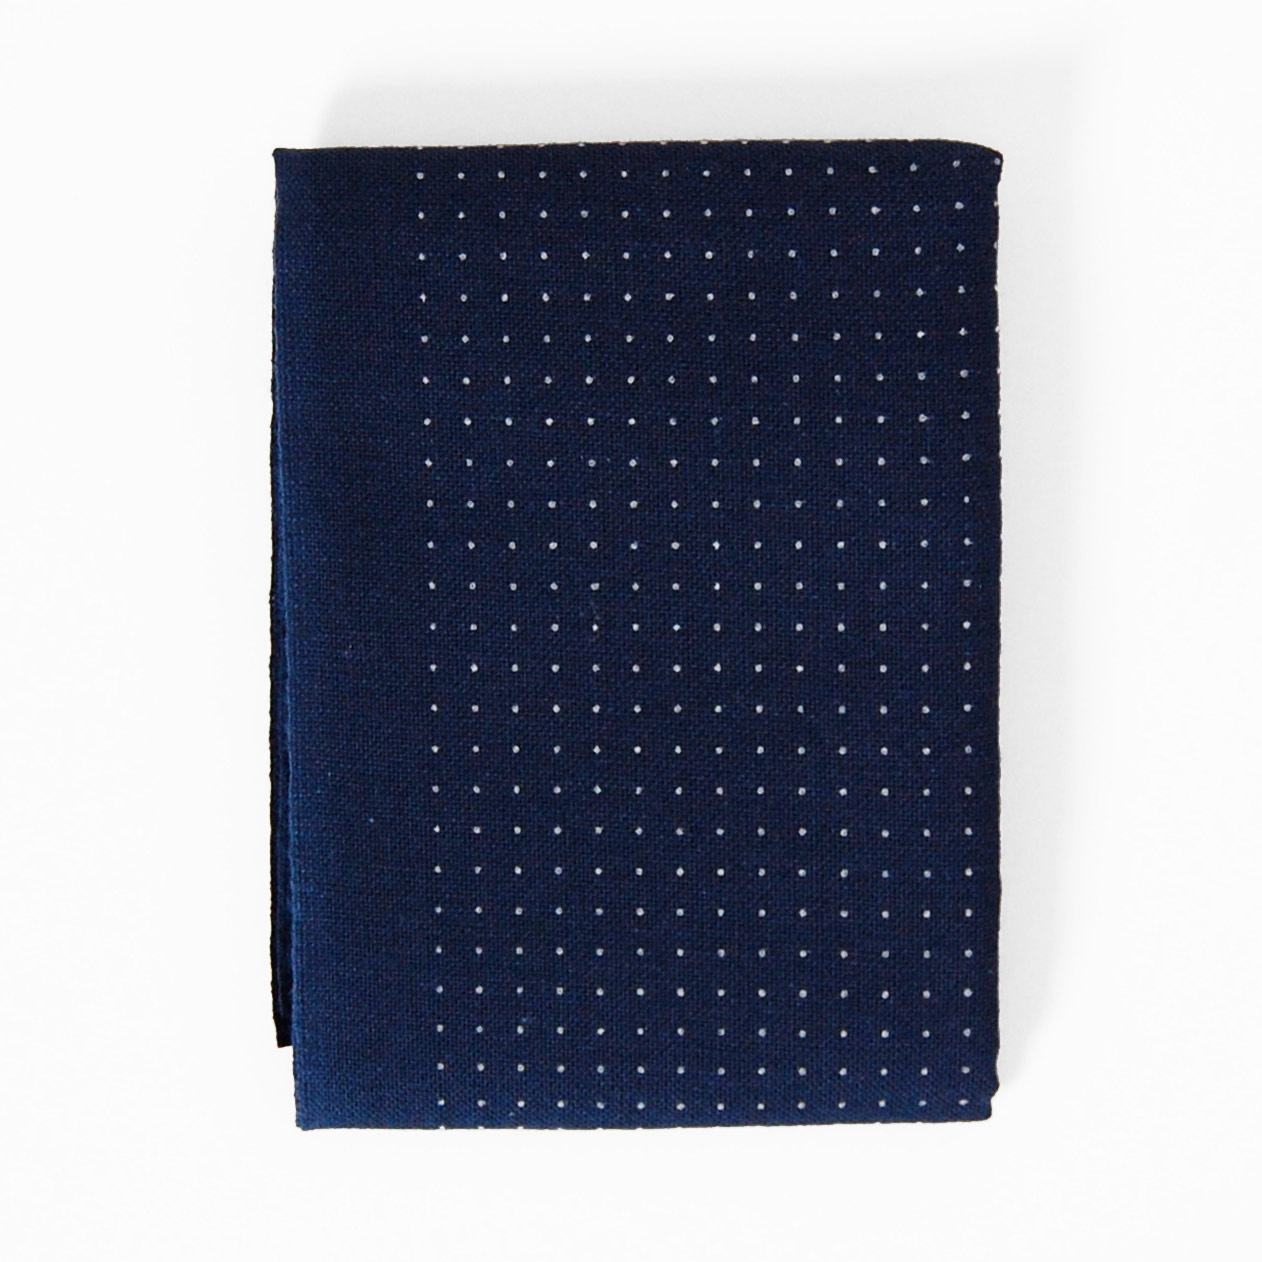 Olympus dotted sashiko sampler fabric in navy blue